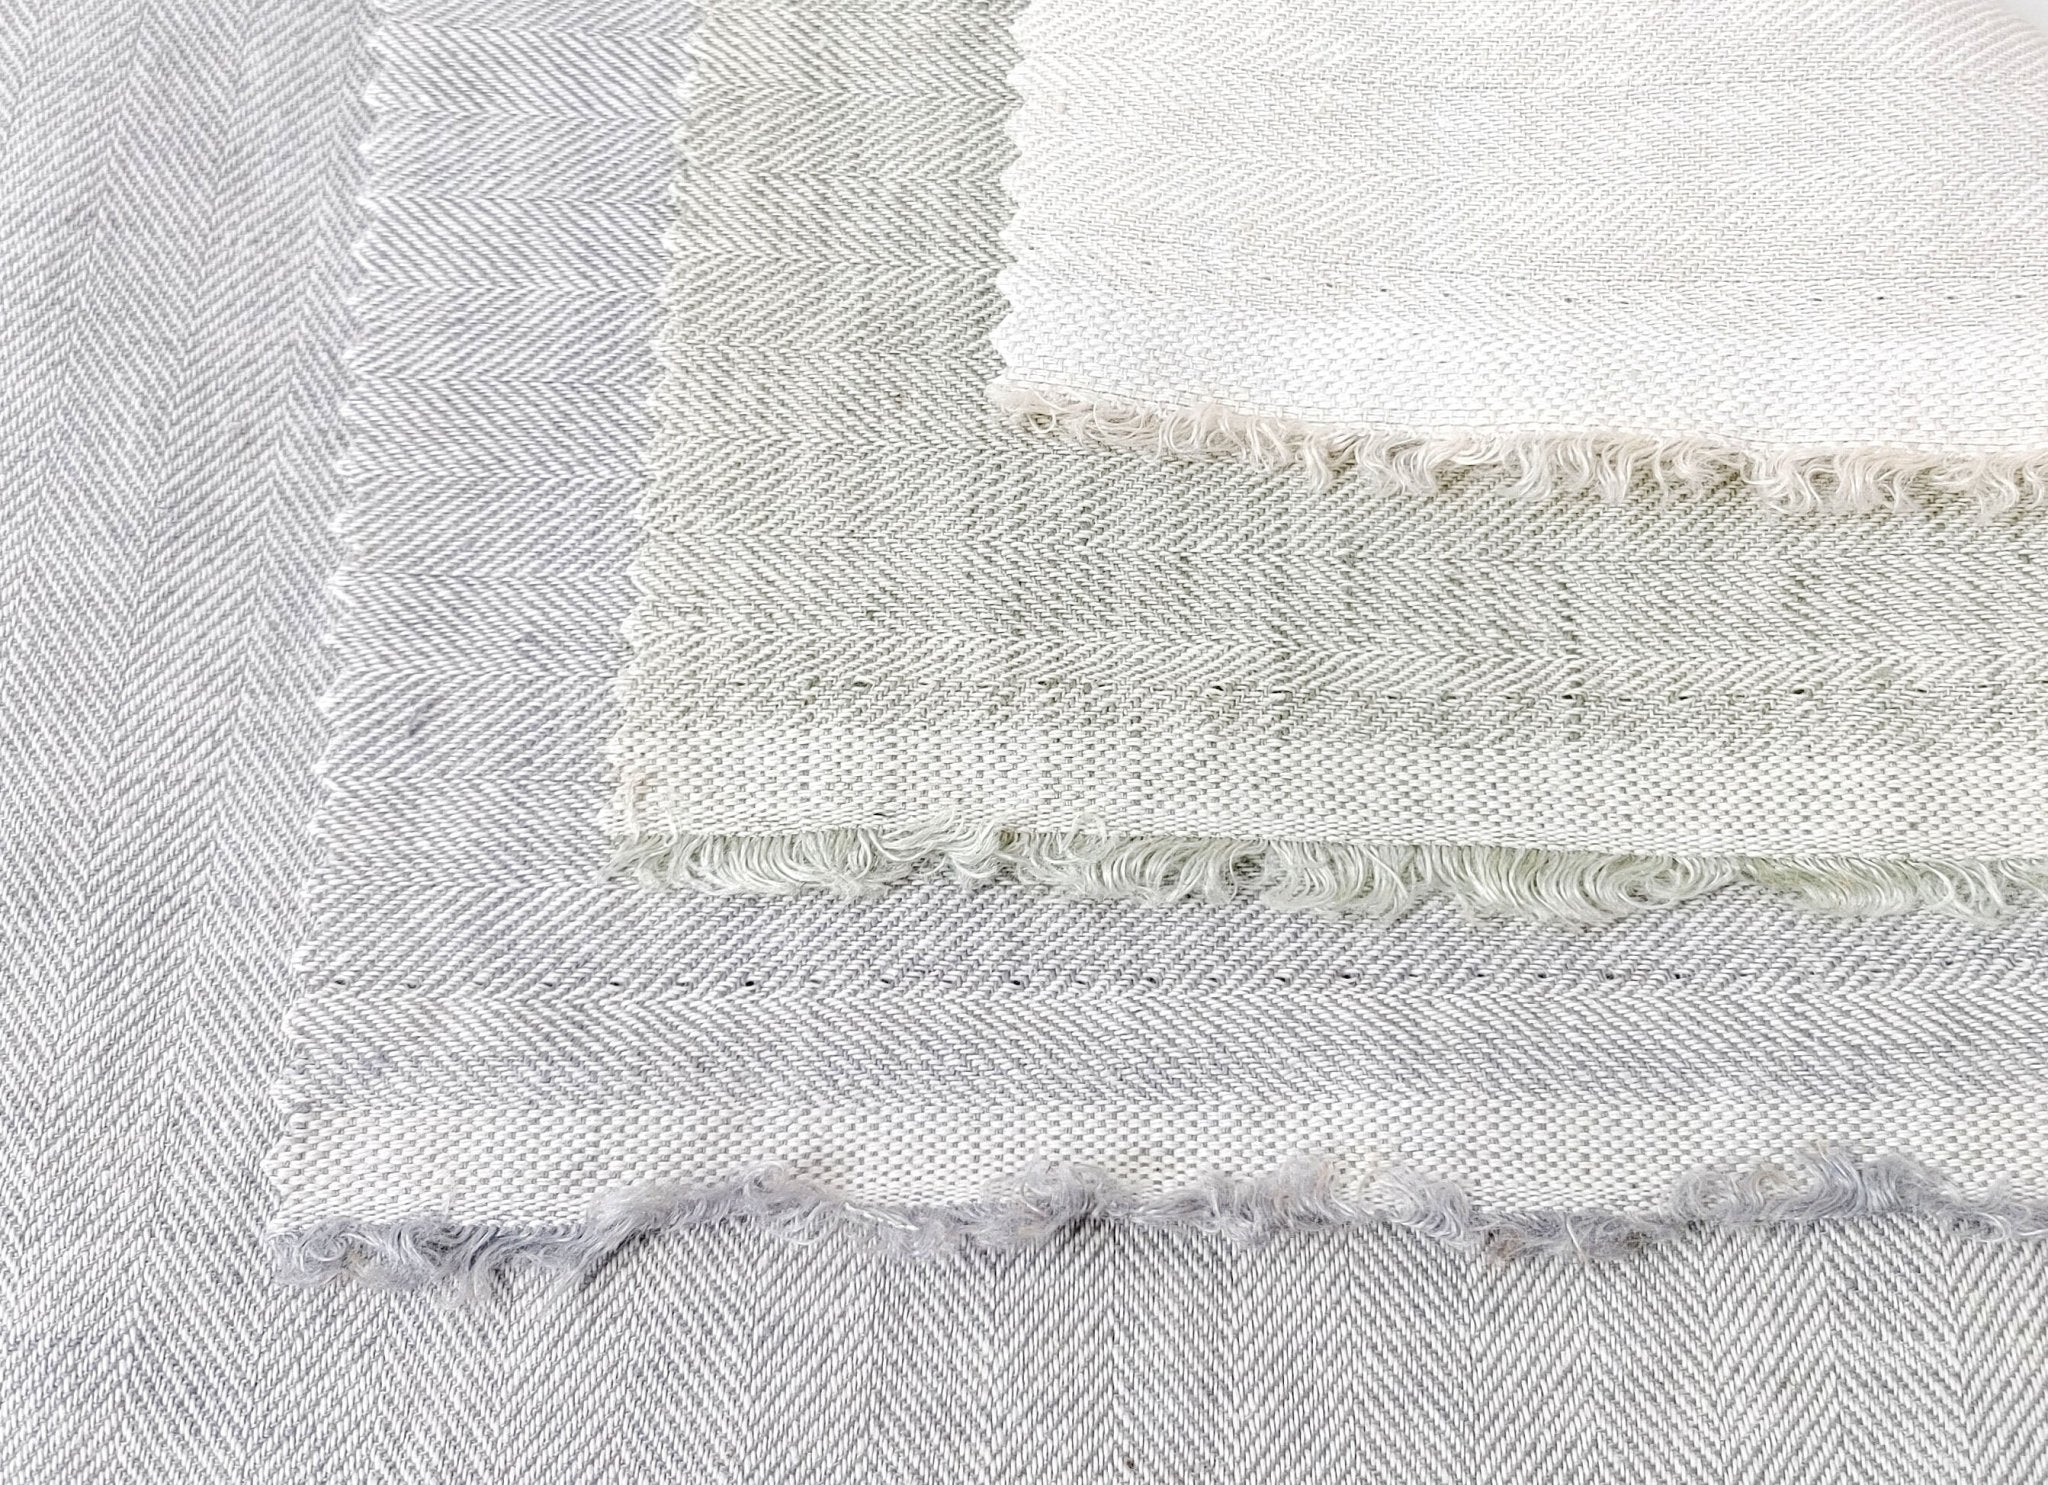 Linen Cotton Chambray Herringbone Twill (HBT) Fabric 7169 7170 7344 - The Linen Lab - Green(light)